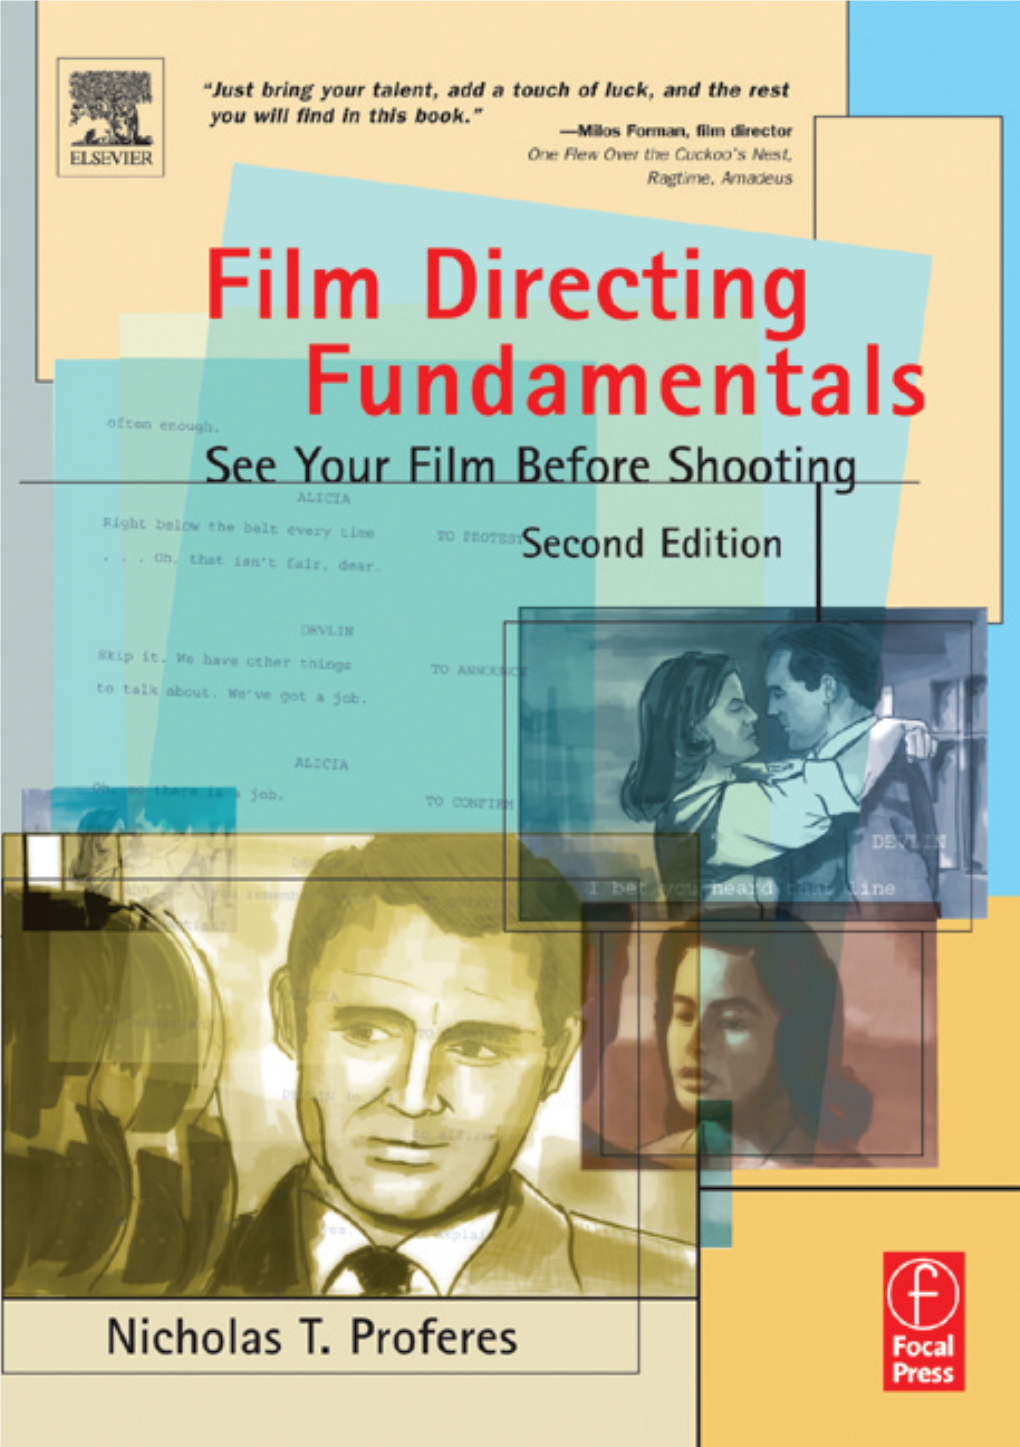 FILM DIRECTING FUNDAMENTALS Film Directing Fundamentals Second Edition